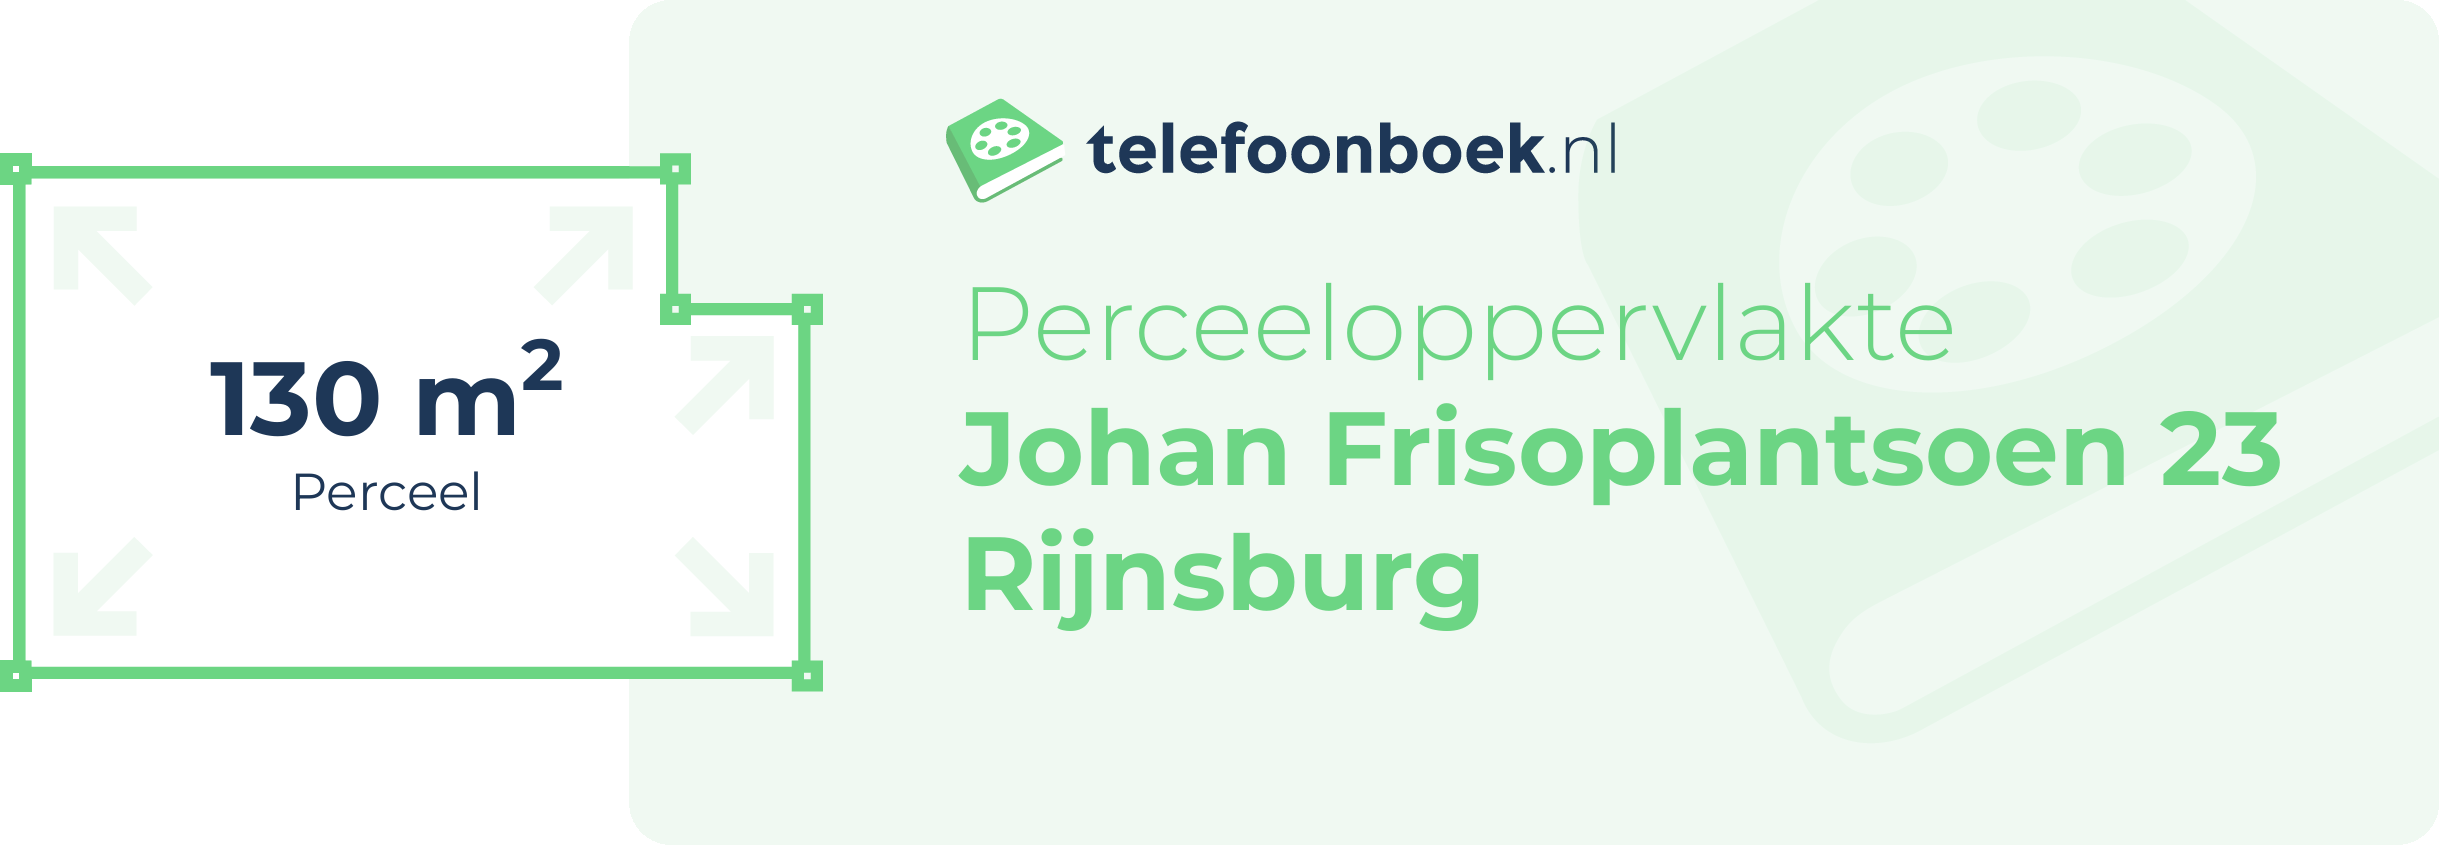 Perceeloppervlakte Johan Frisoplantsoen 23 Rijnsburg